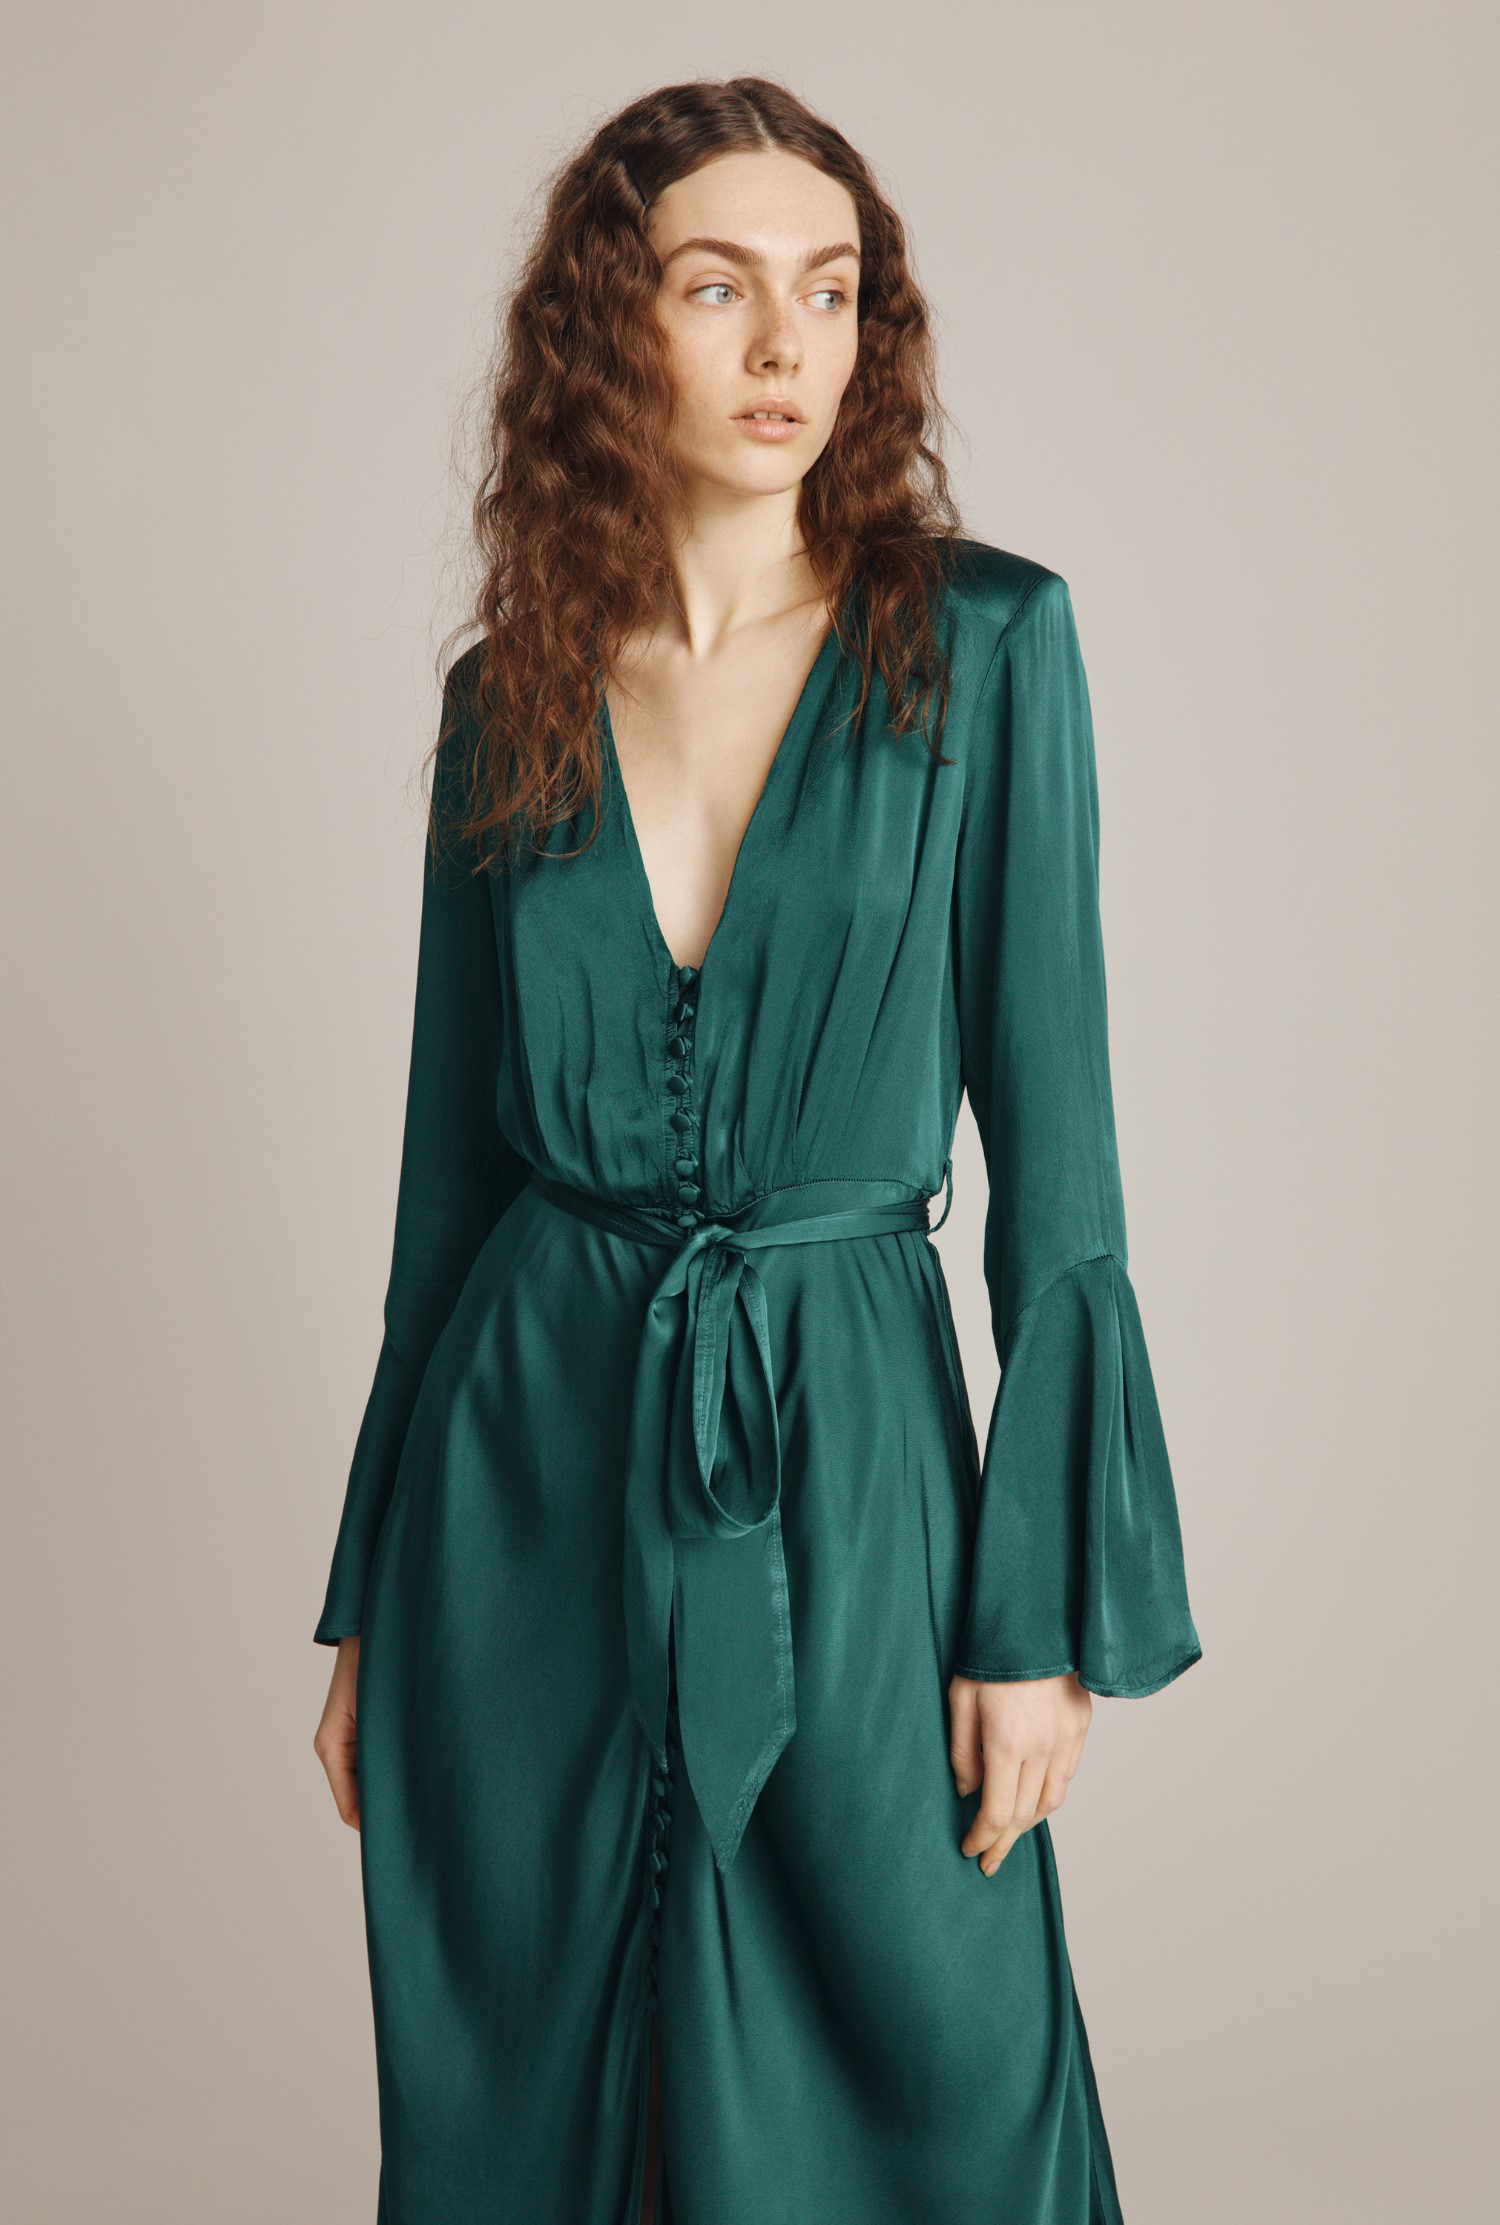 Annabelle Emerald Satin Dress | Ghost London